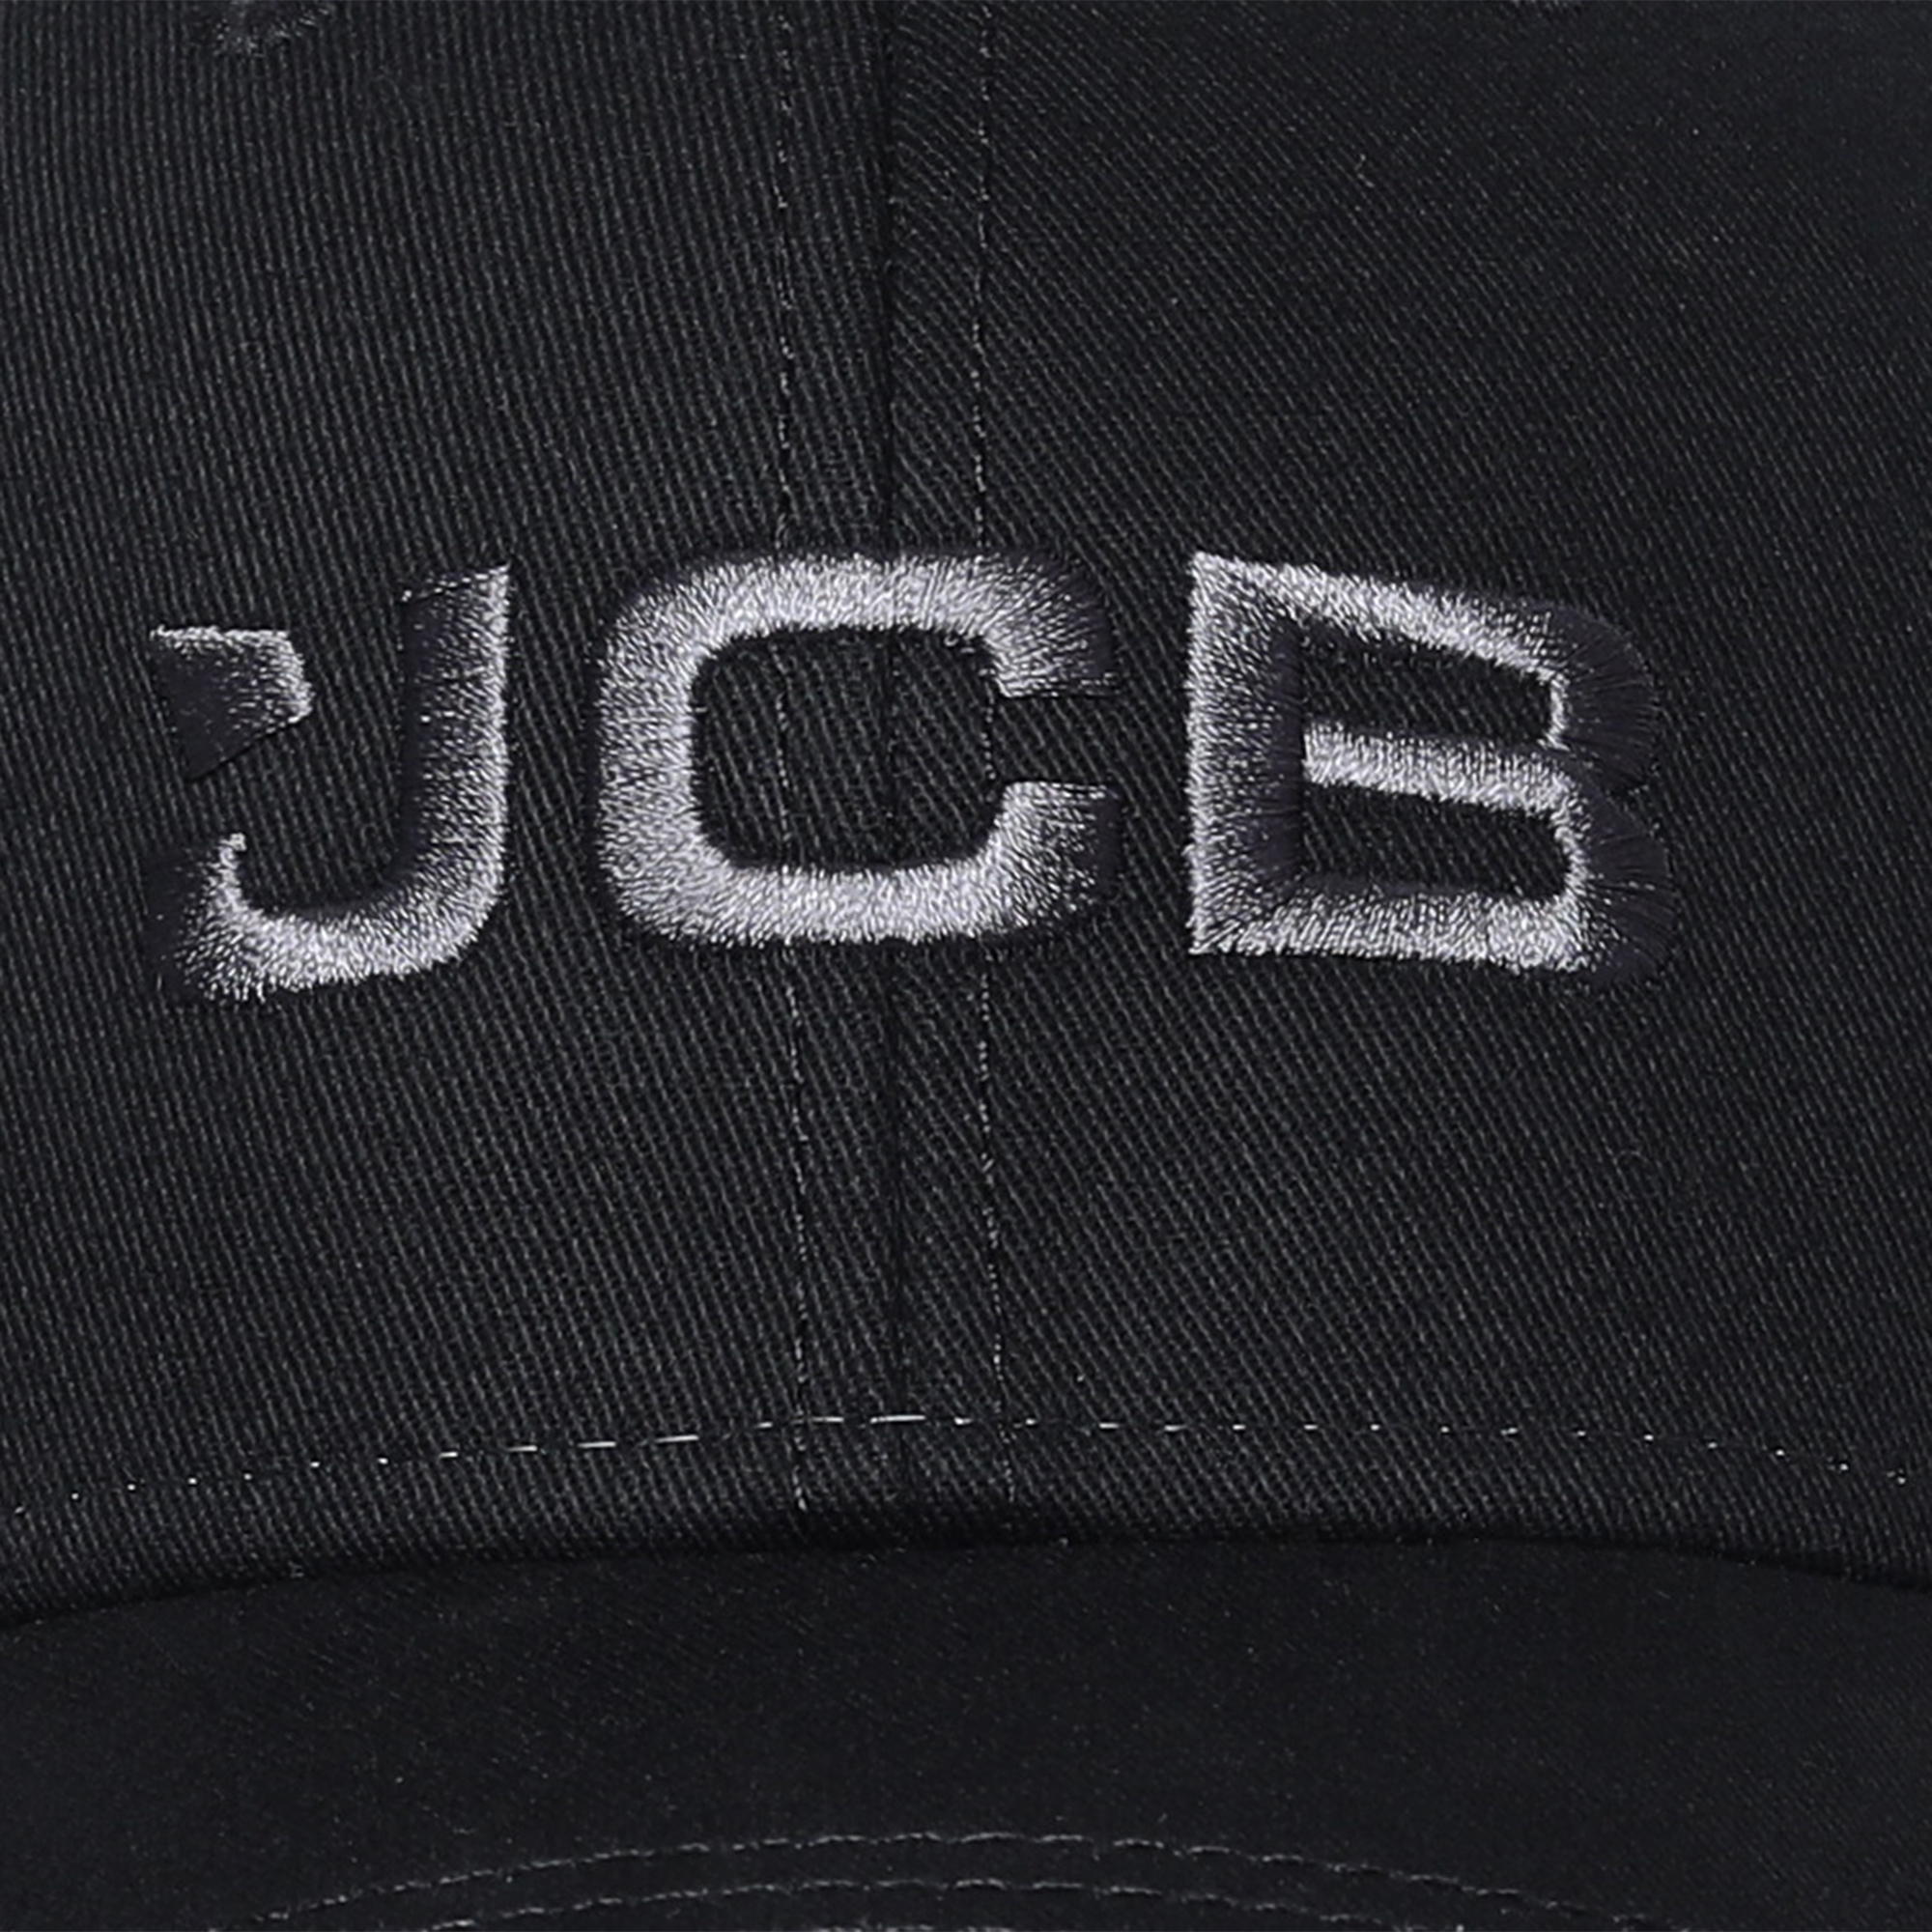 JCB Truckers Cap – Welcome to the JCB merchandise shop India website